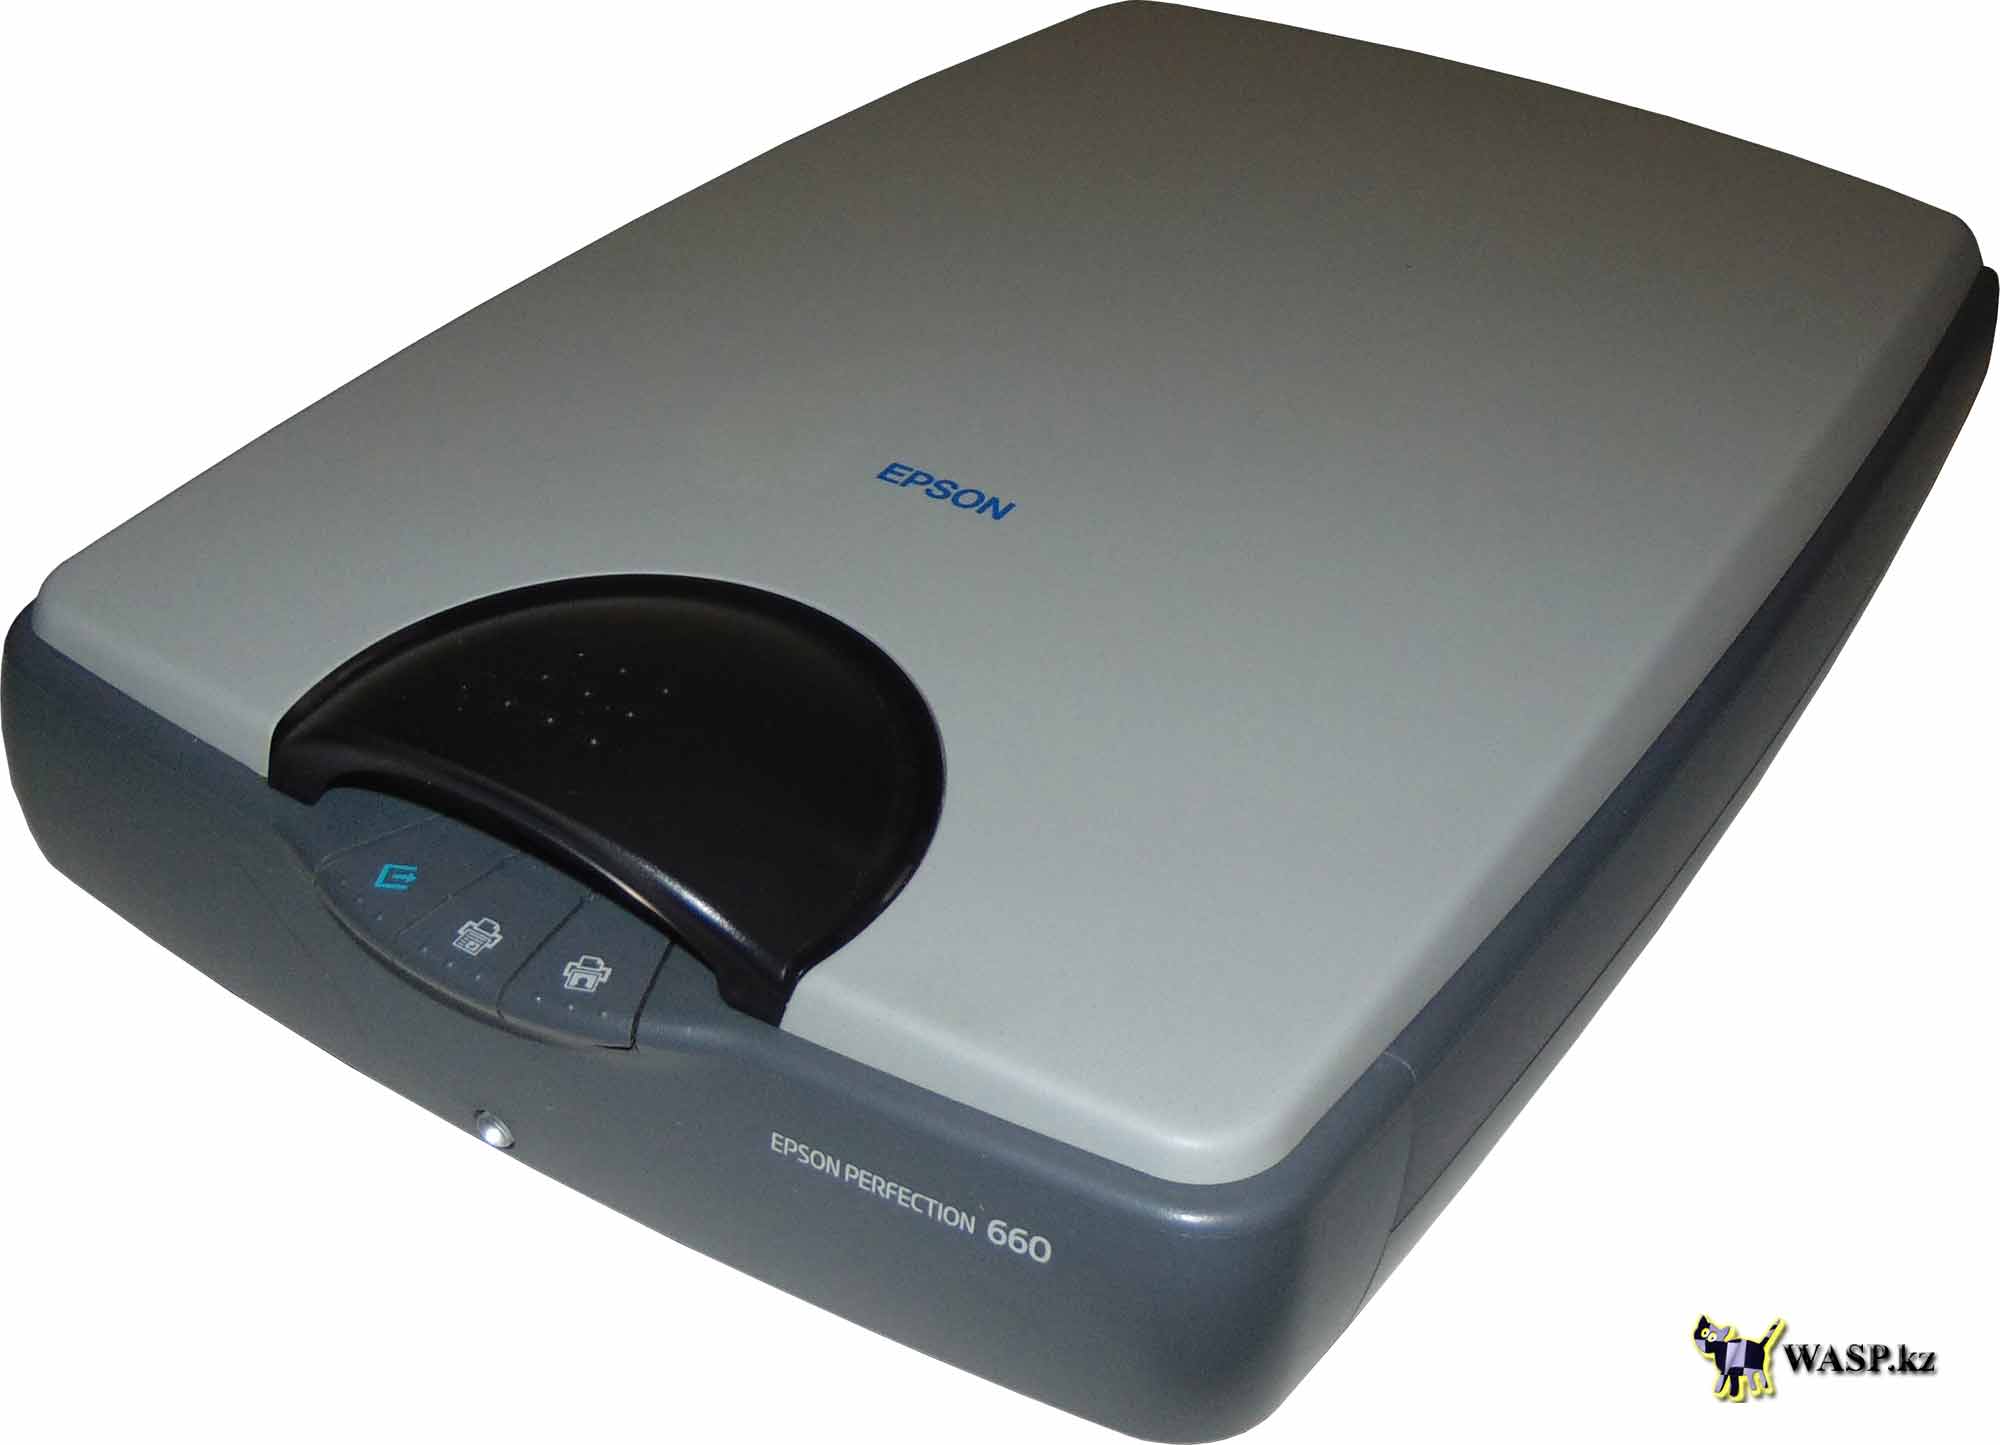 Epson Perfection 660 планшетный сканер